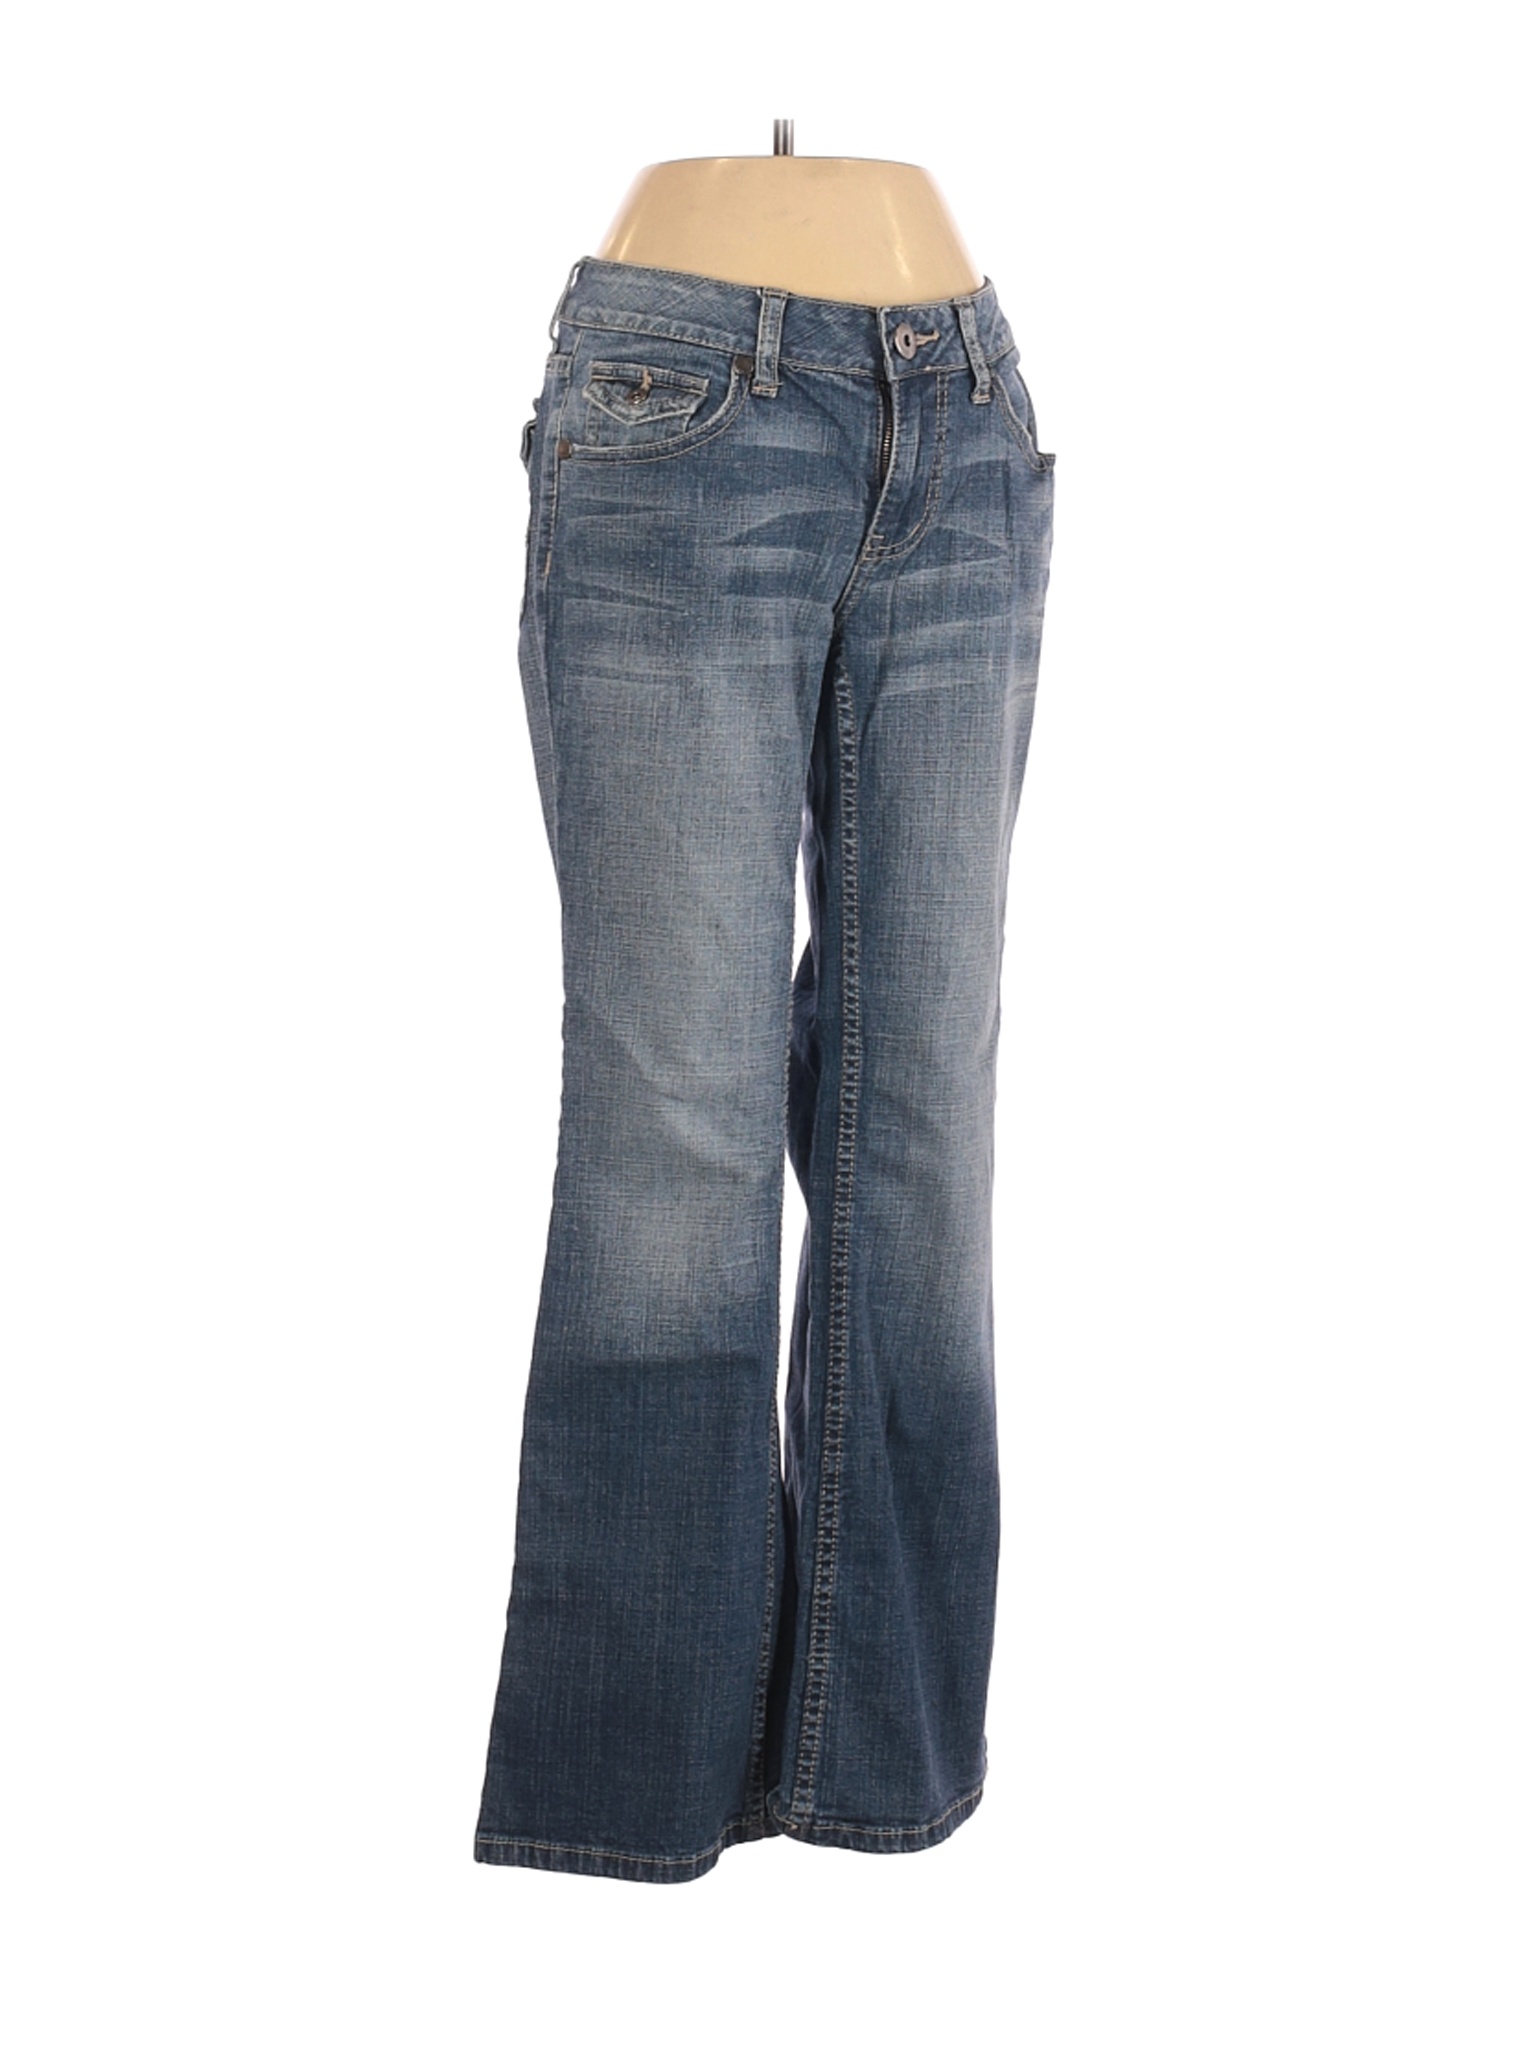 Arizona Jean Company Women Blue Jeans 5 | eBay